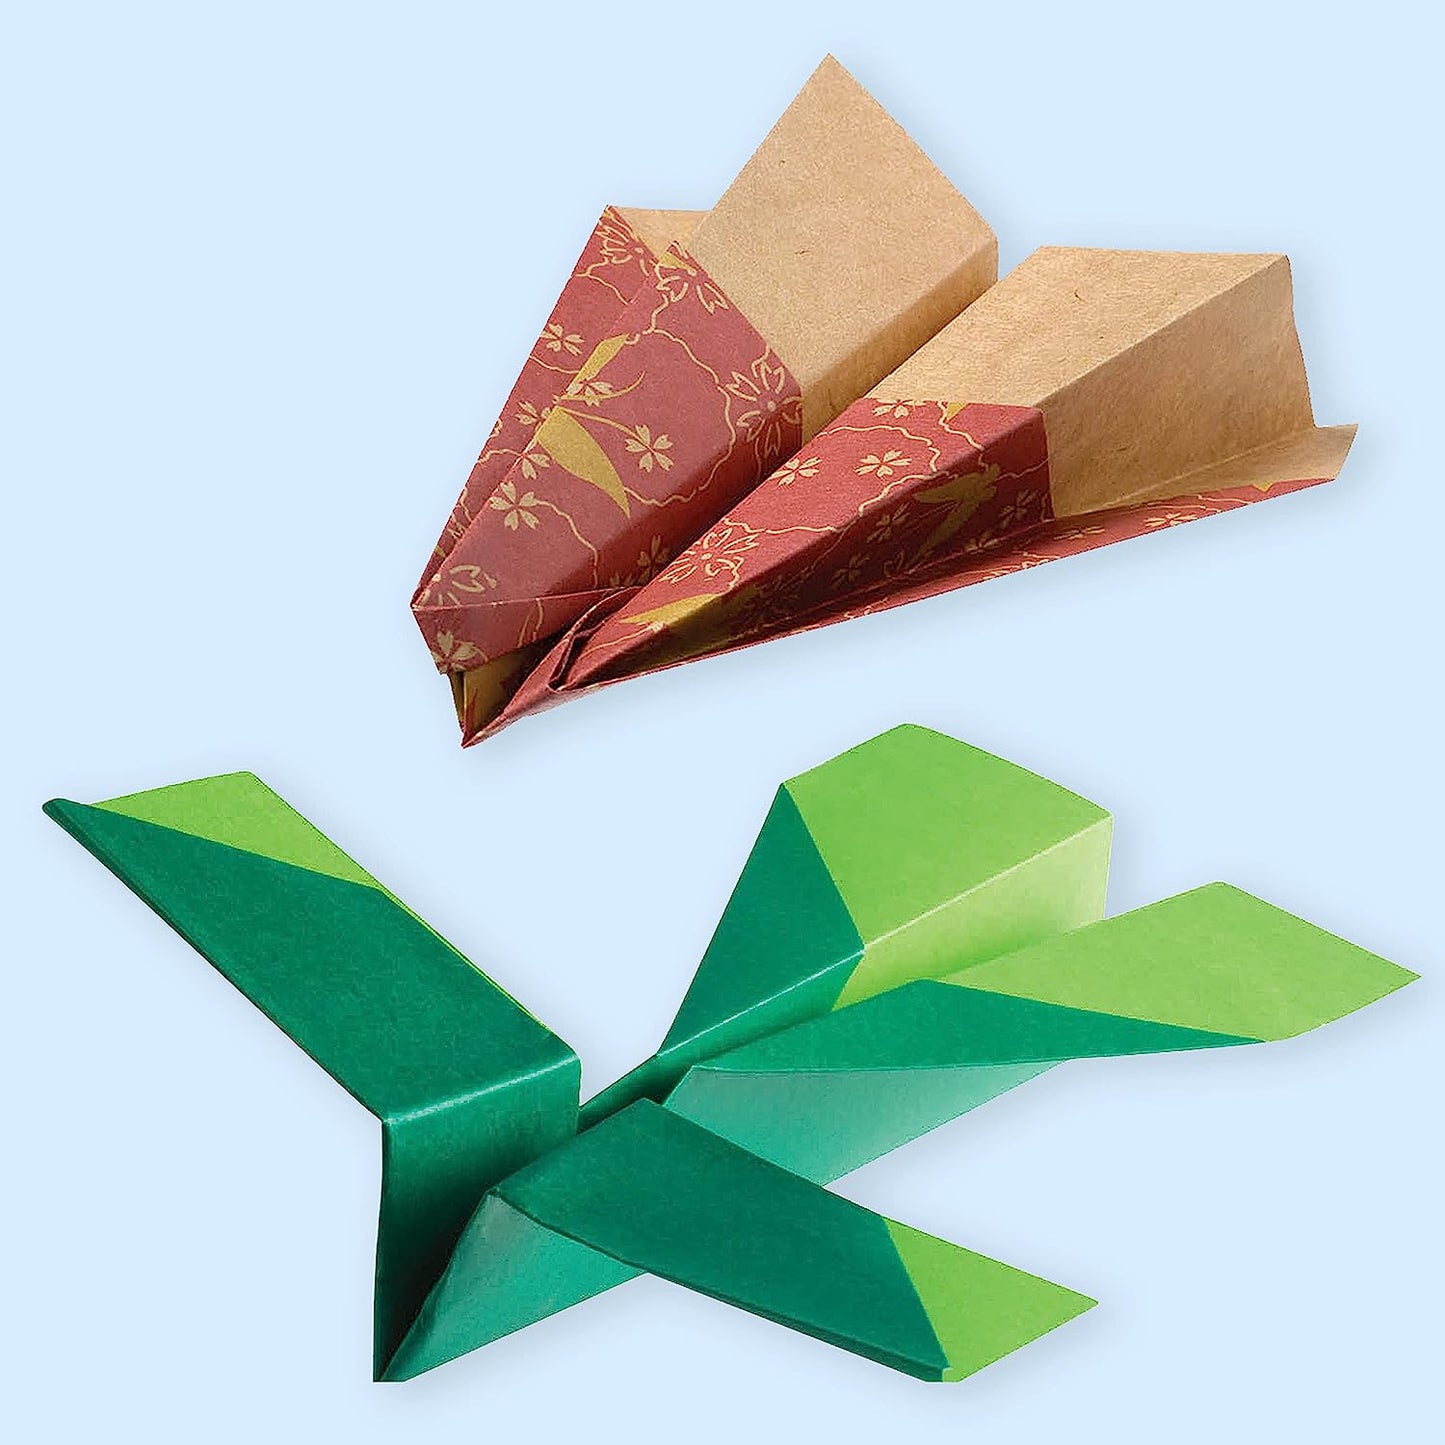 Ultimate Paper Plane